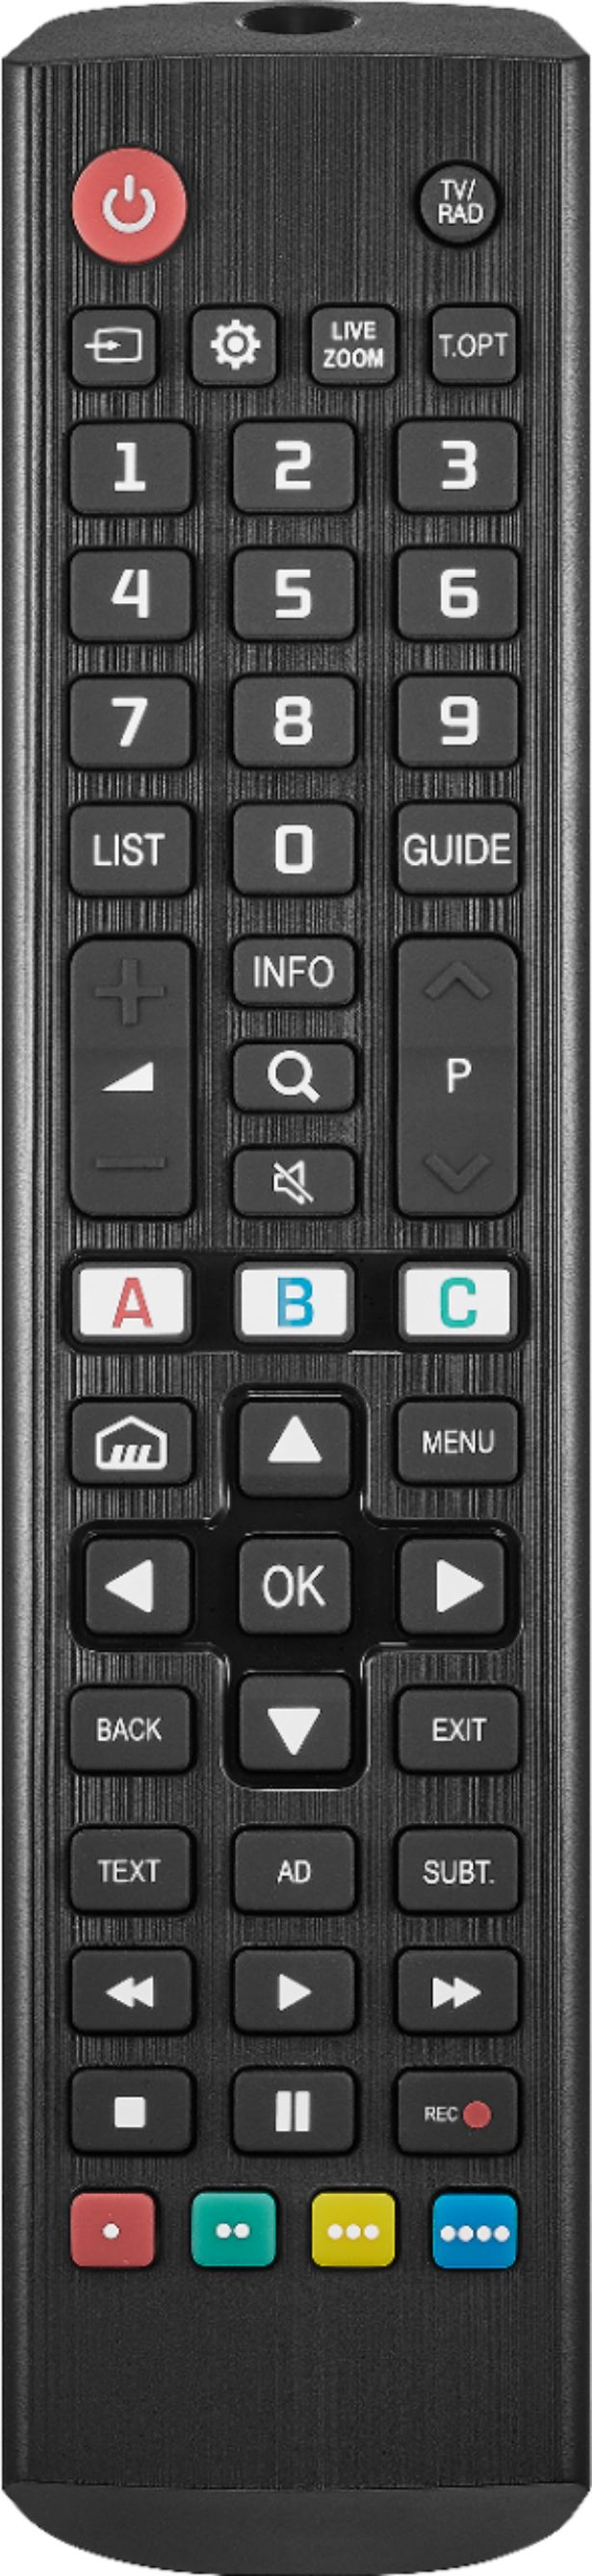 LG TV, Video & Audio Remote Controls for sale